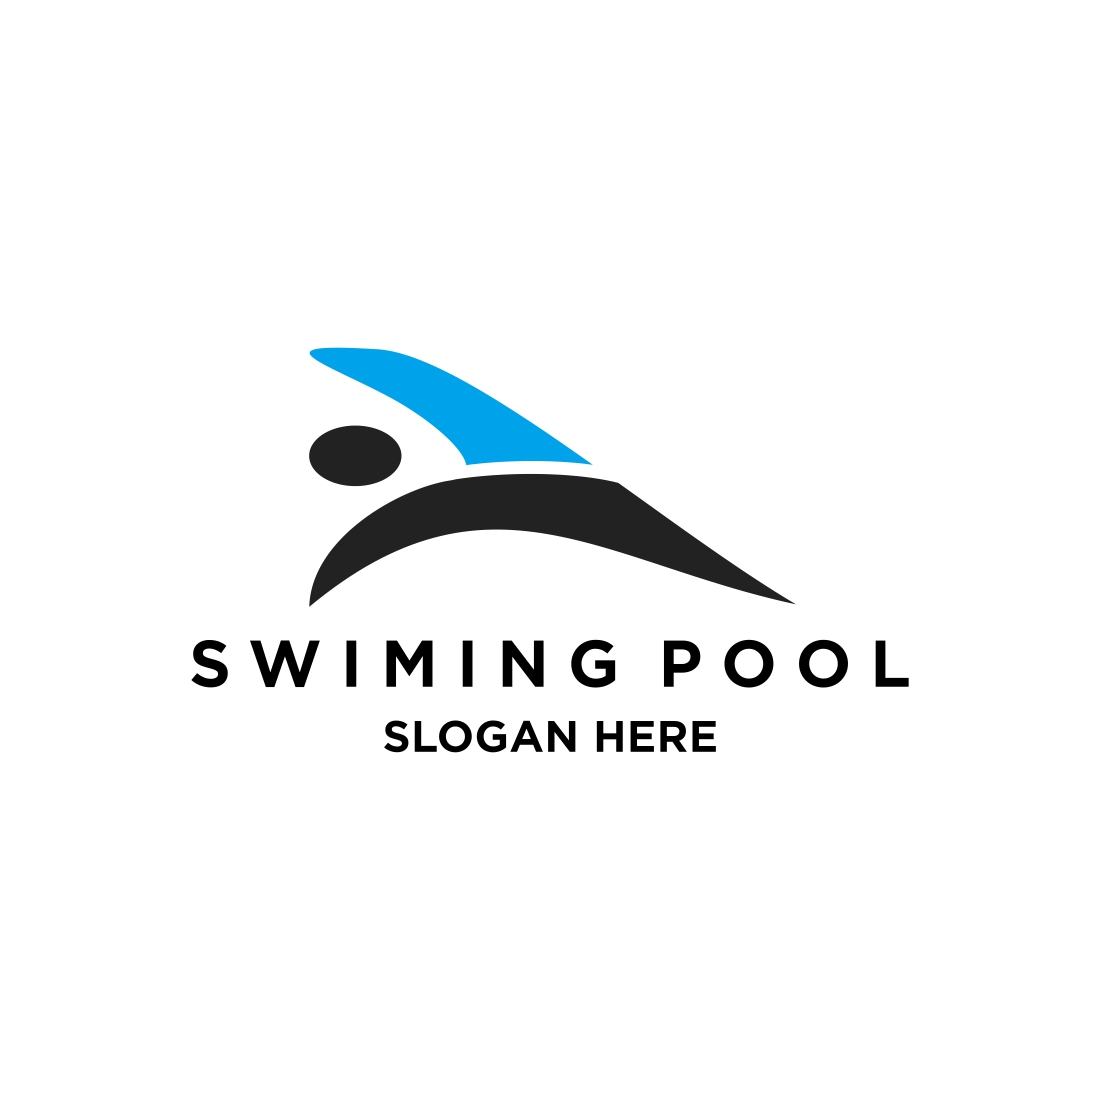 Swimming Concept vector logo and symbol Design cover image.